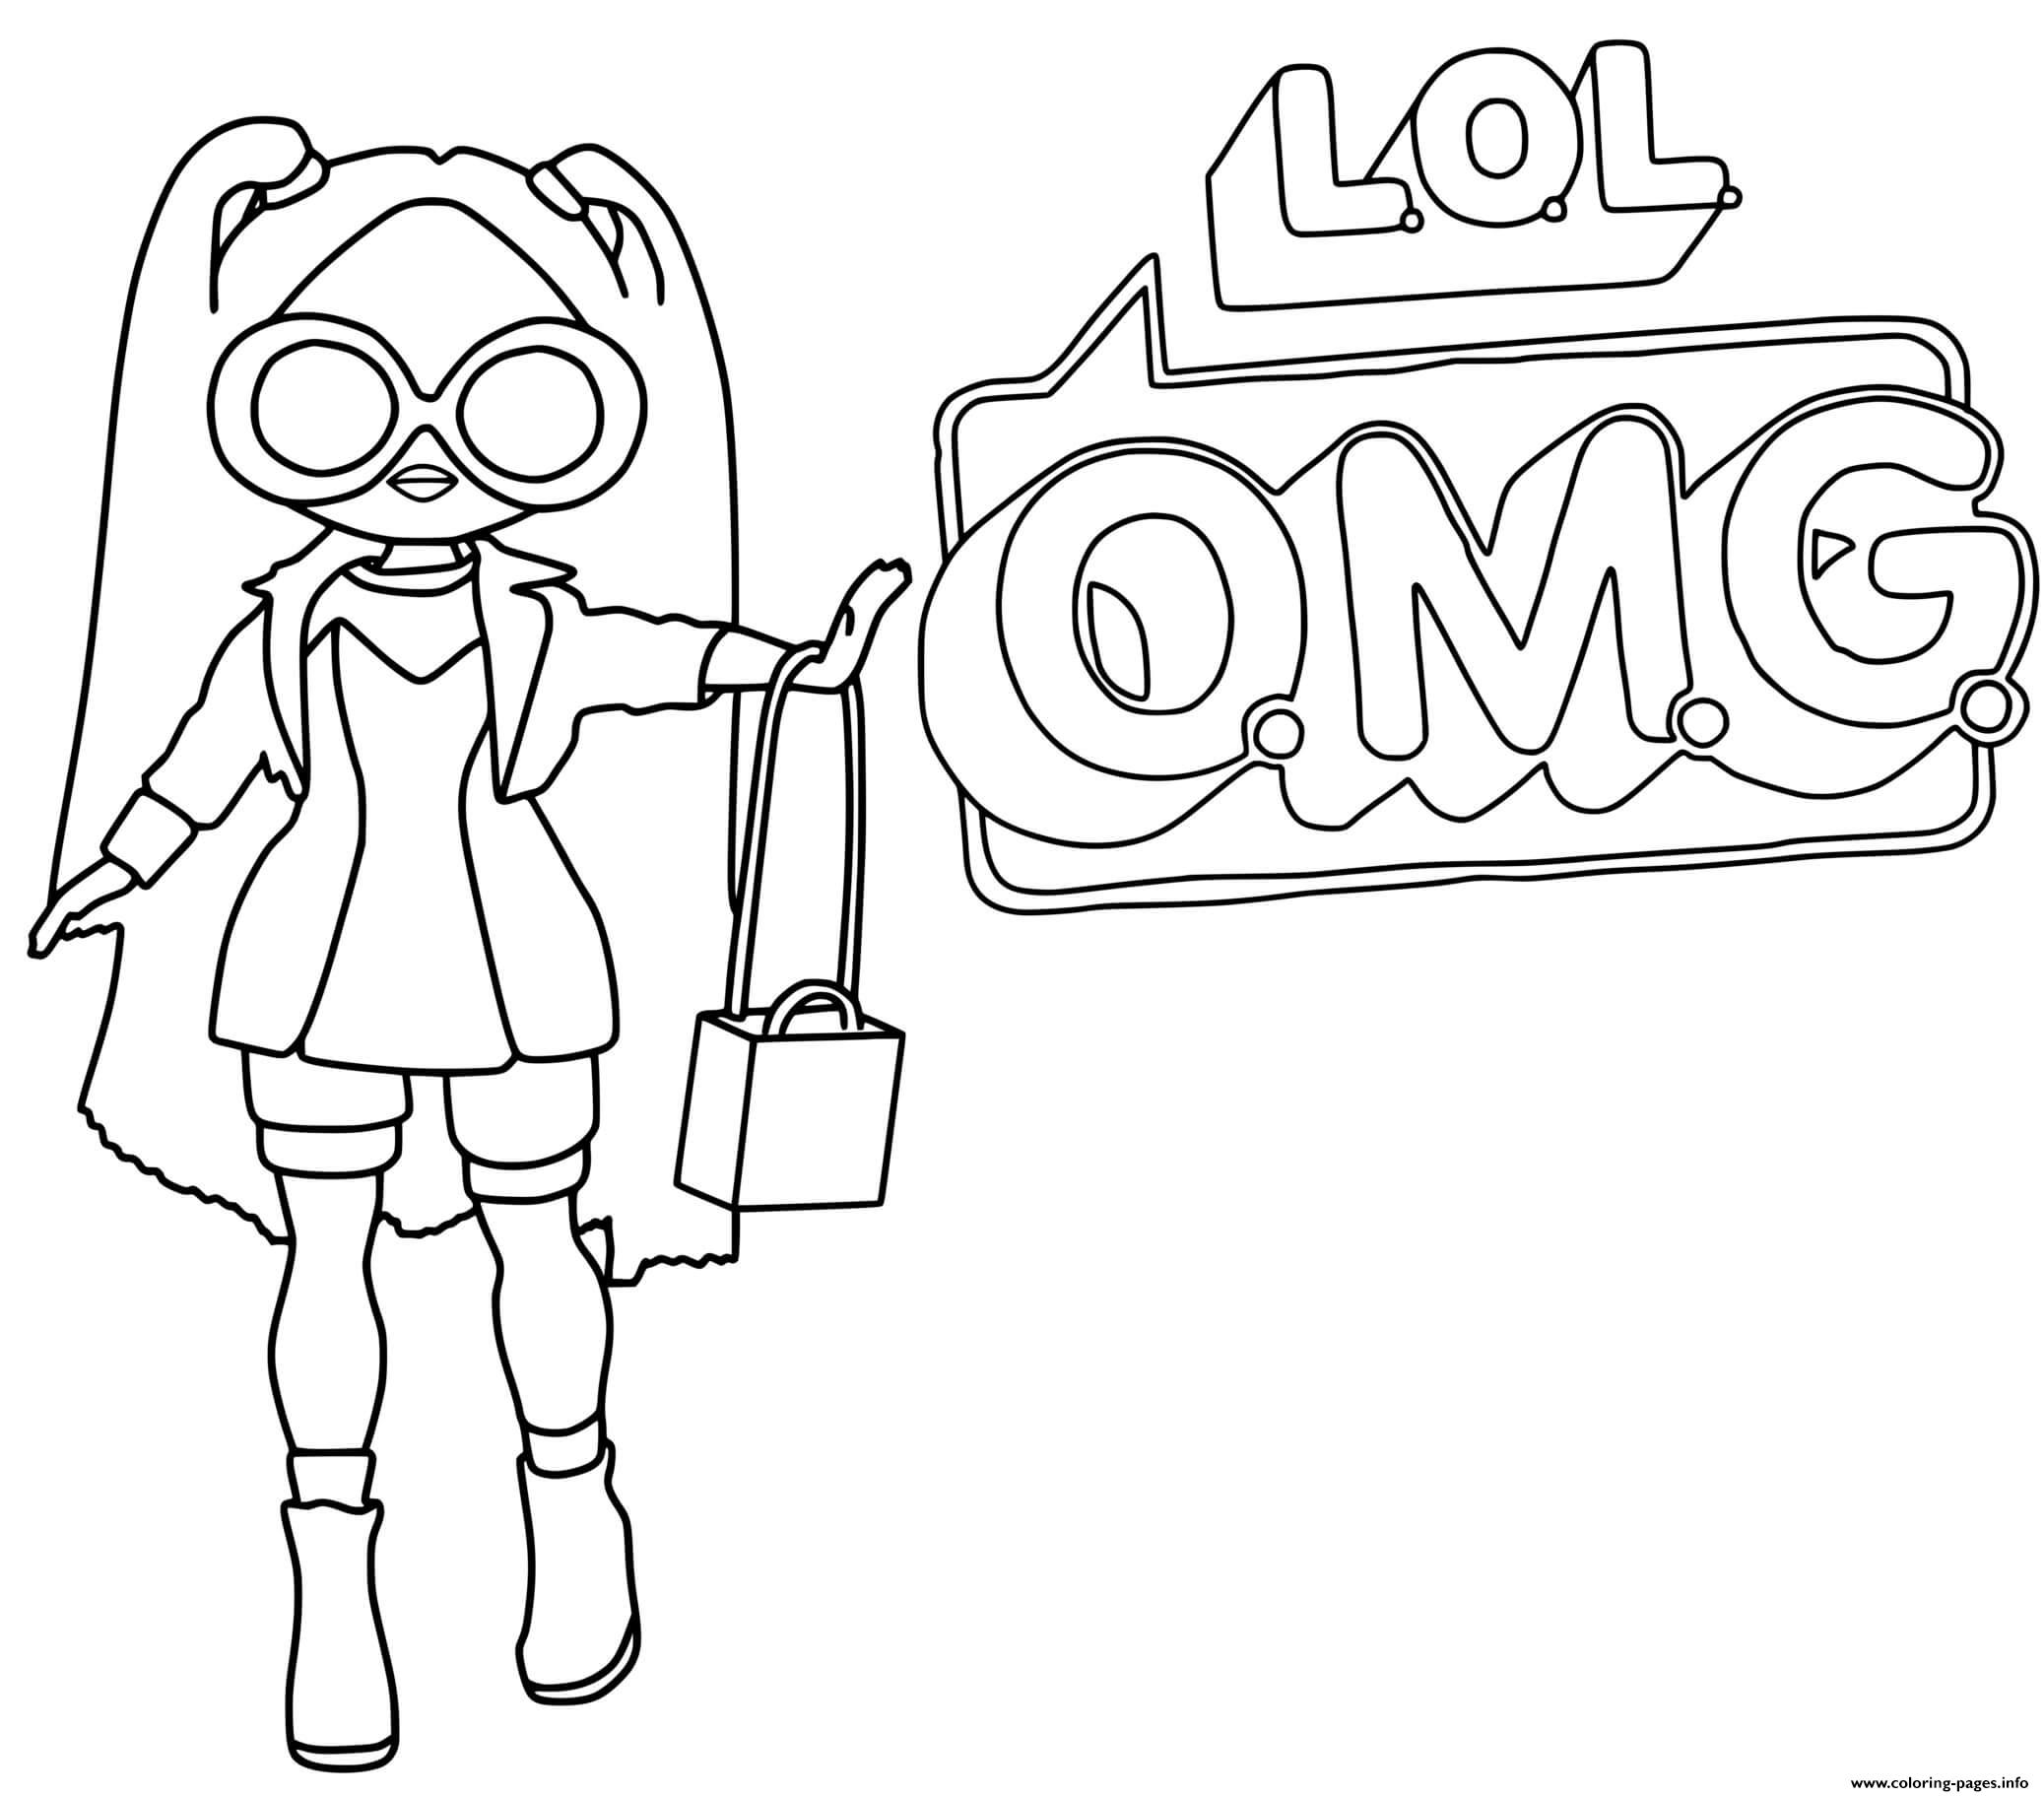 Lol Omg Logo ALT Grrrl Girl coloring